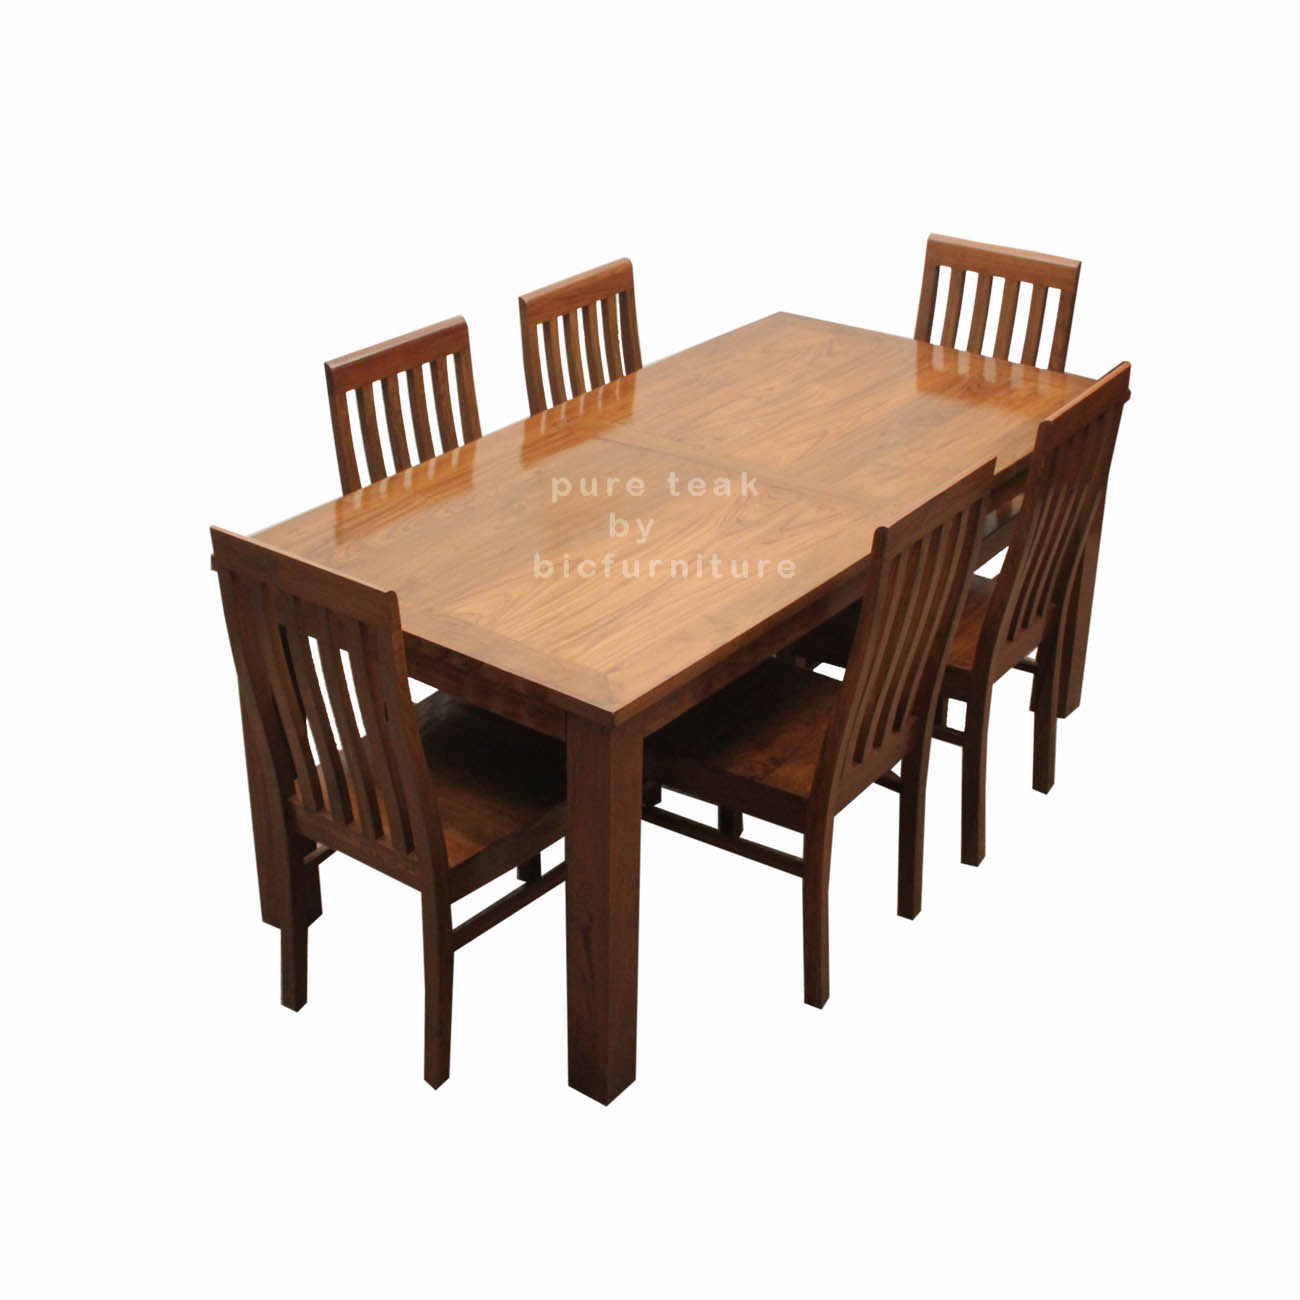 Teak Wood Dining Set In Pure Teak Wood Tws 15 Details Bic Furniture India